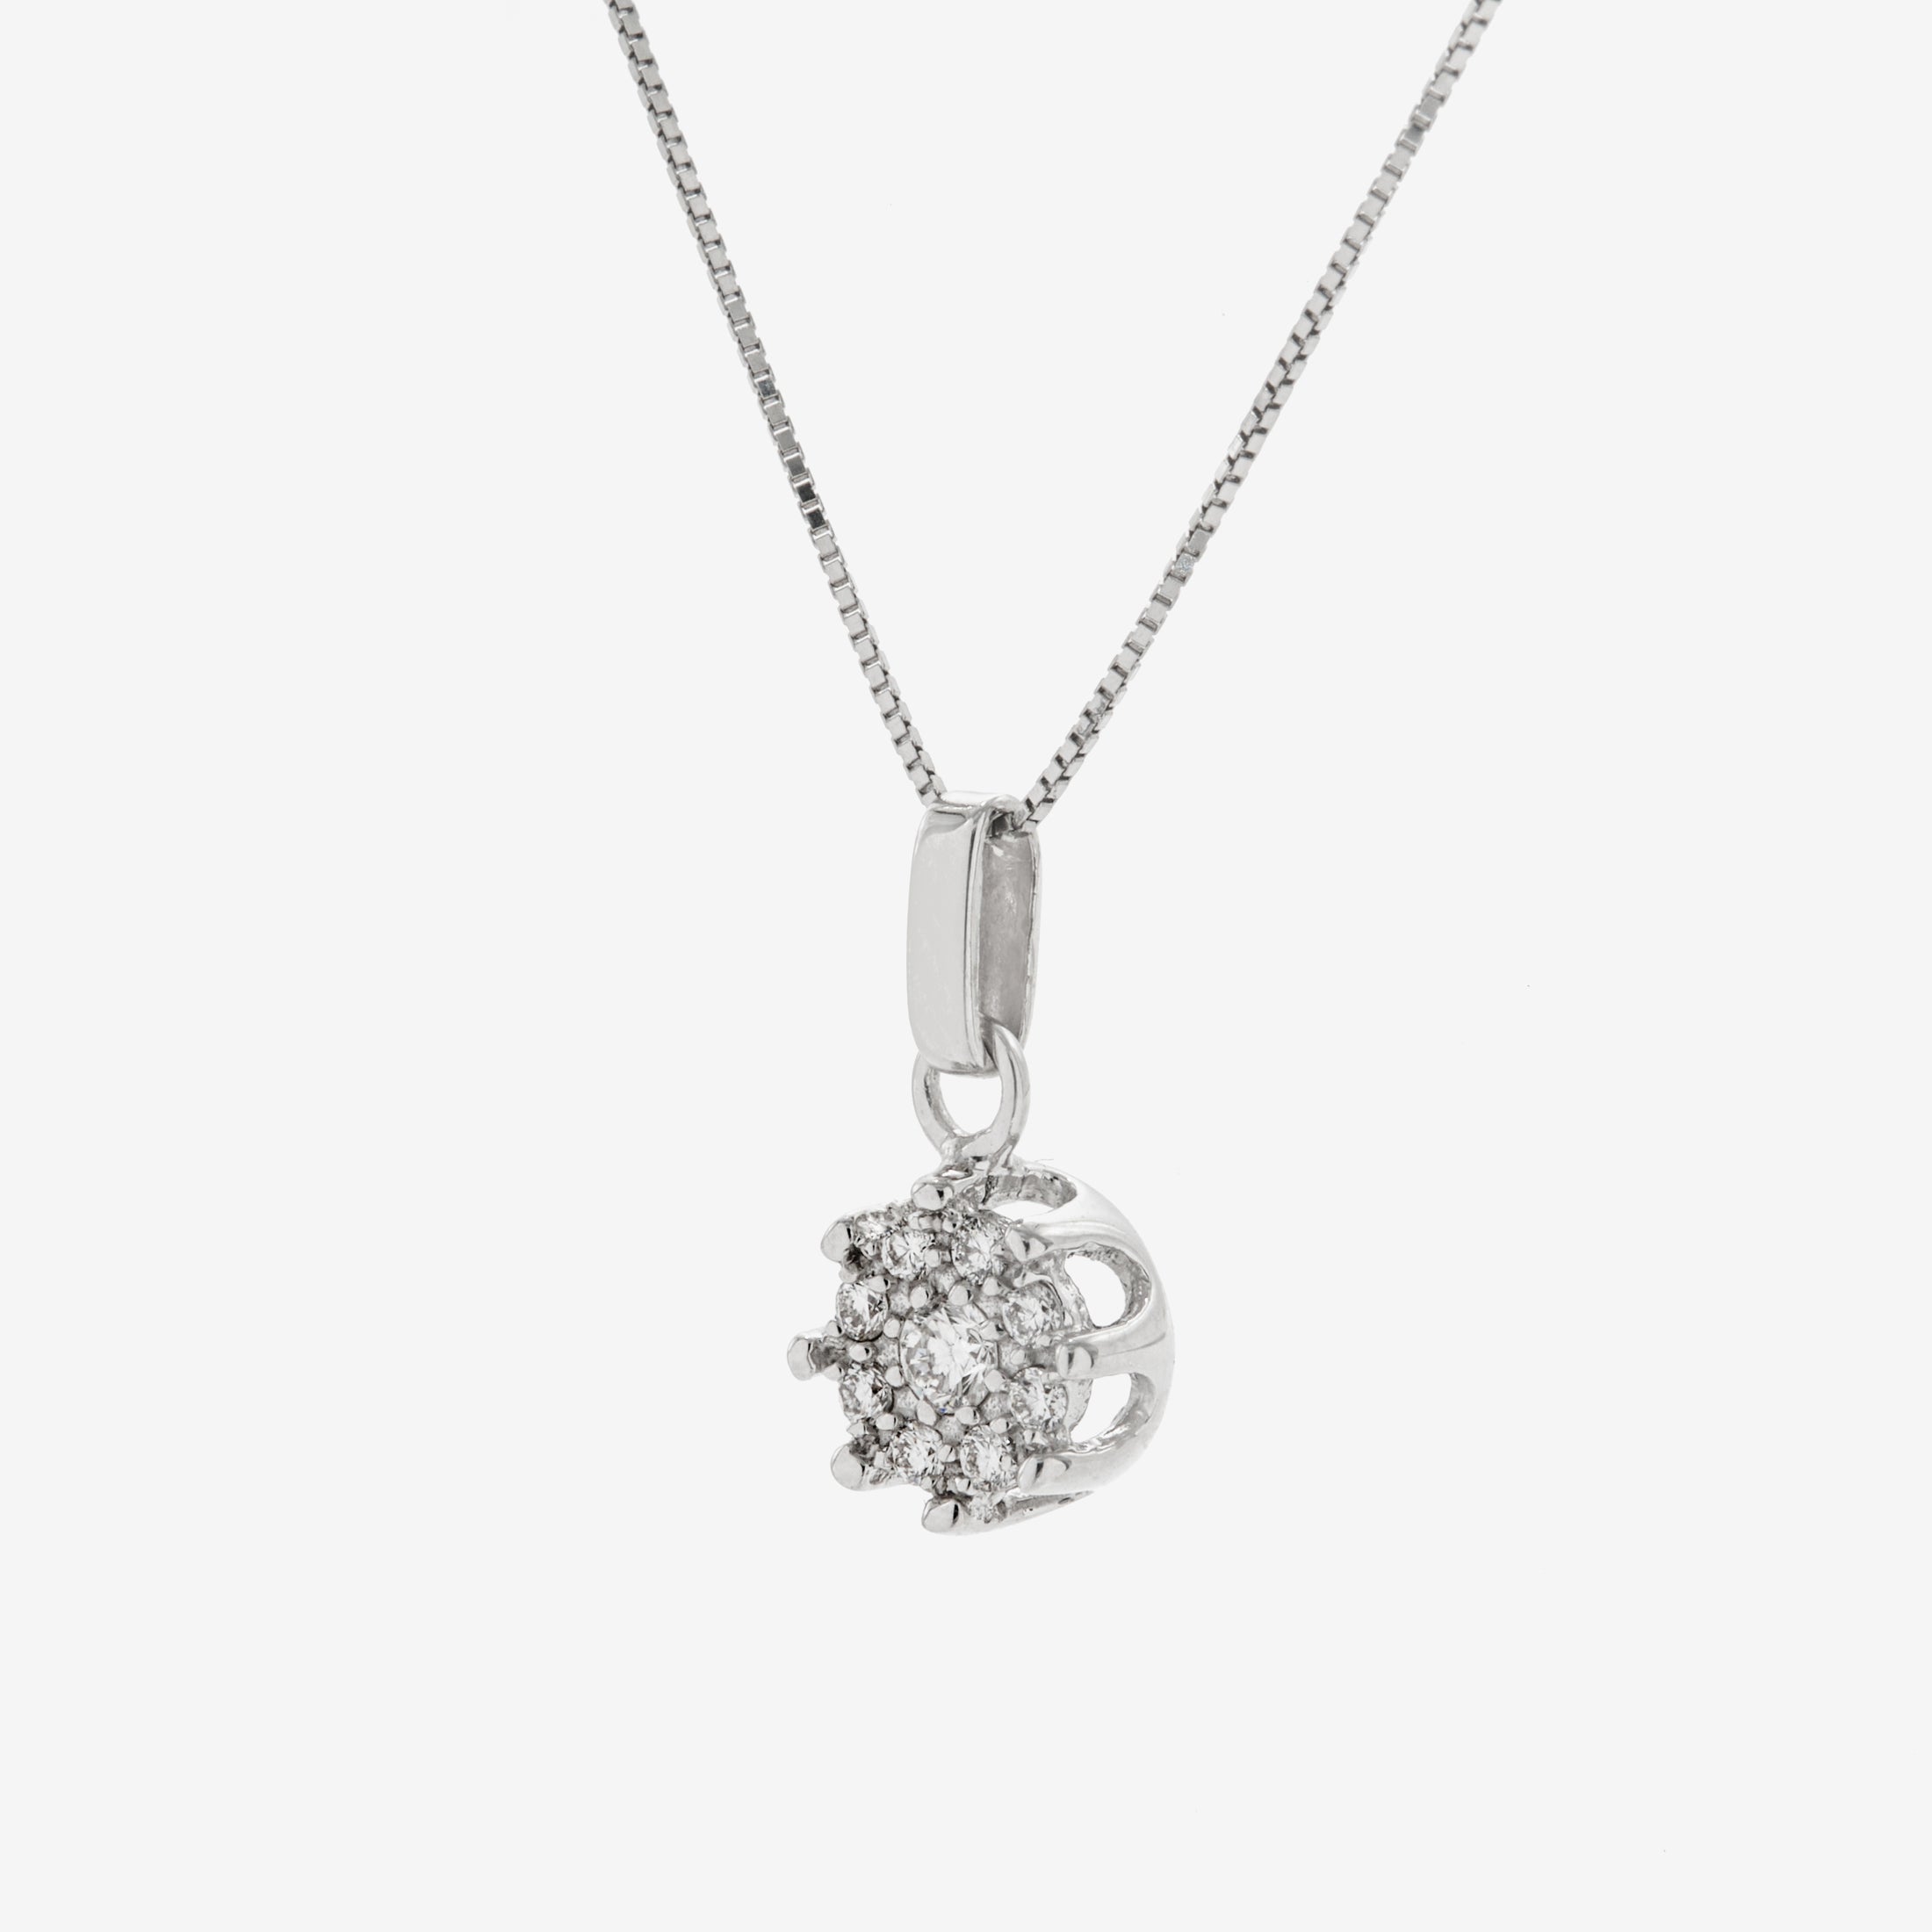 Prince pendant with diamonds